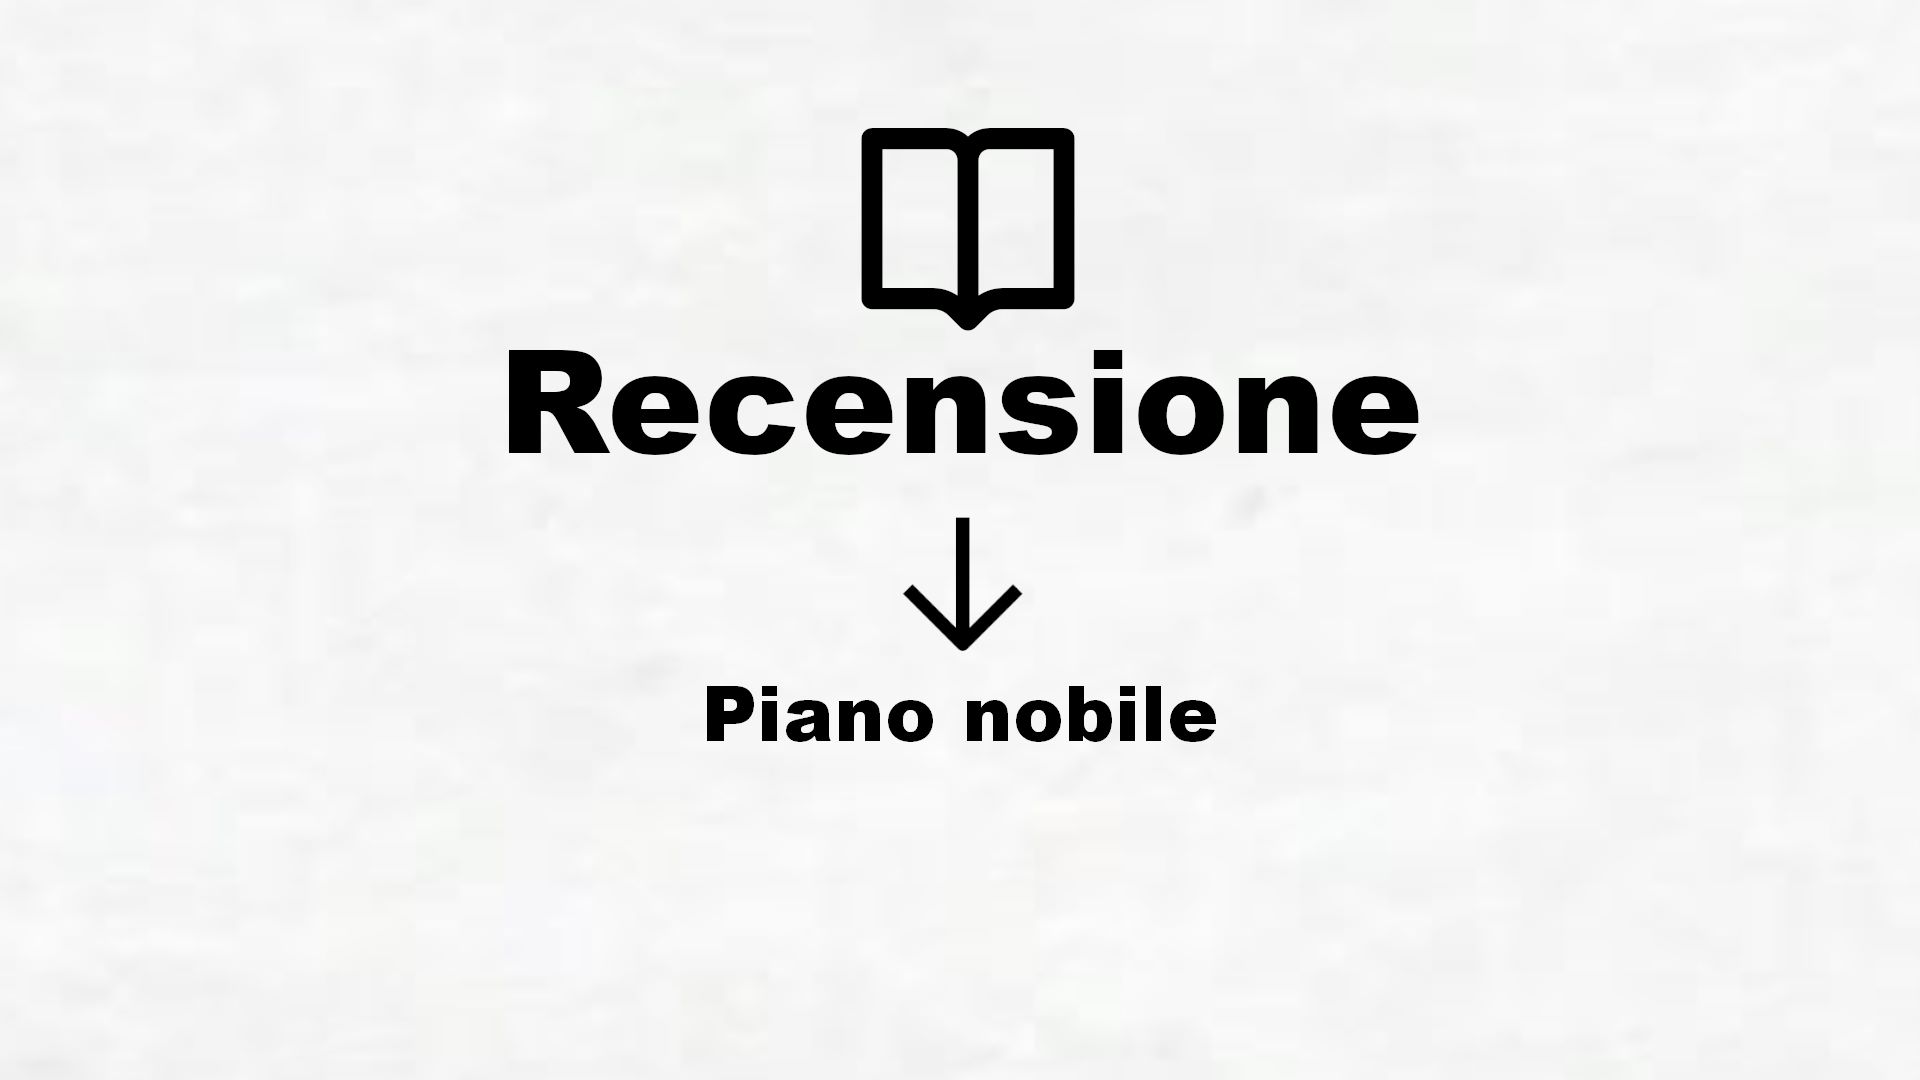 Piano nobile – Recensione Libro